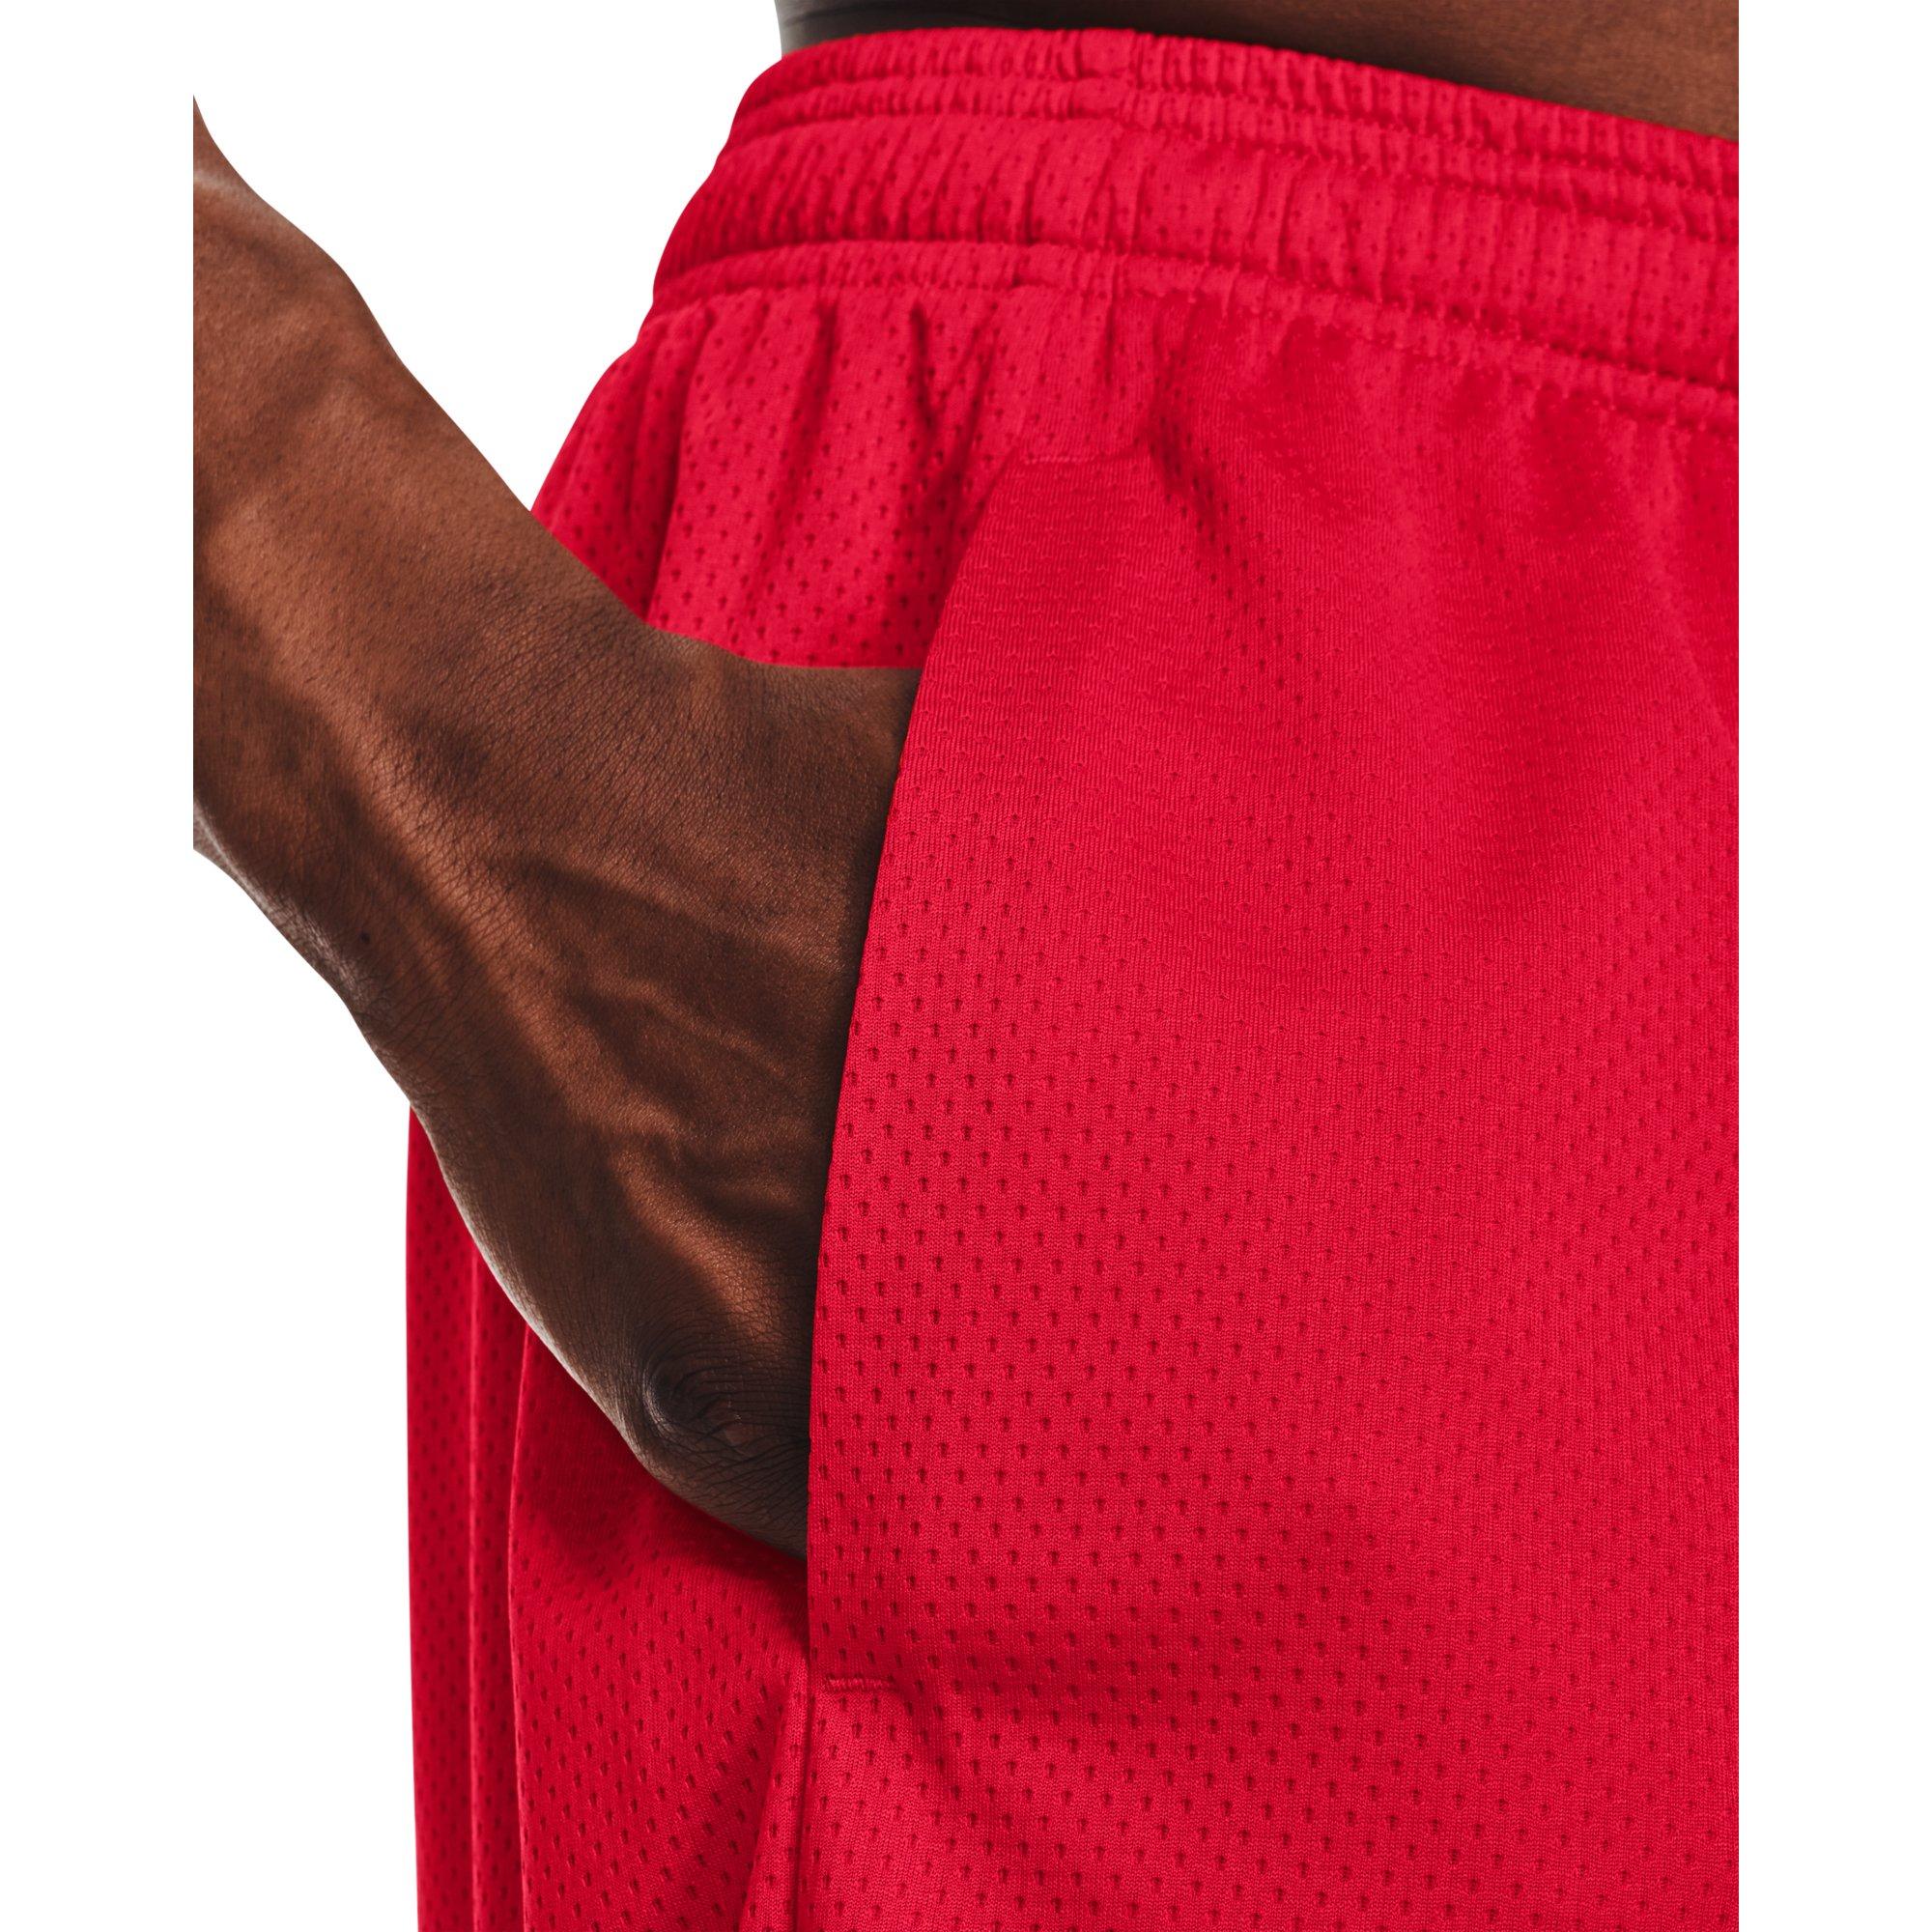 Undergear Body Tech Techino Red Track Shorts Large Item #378B RX73